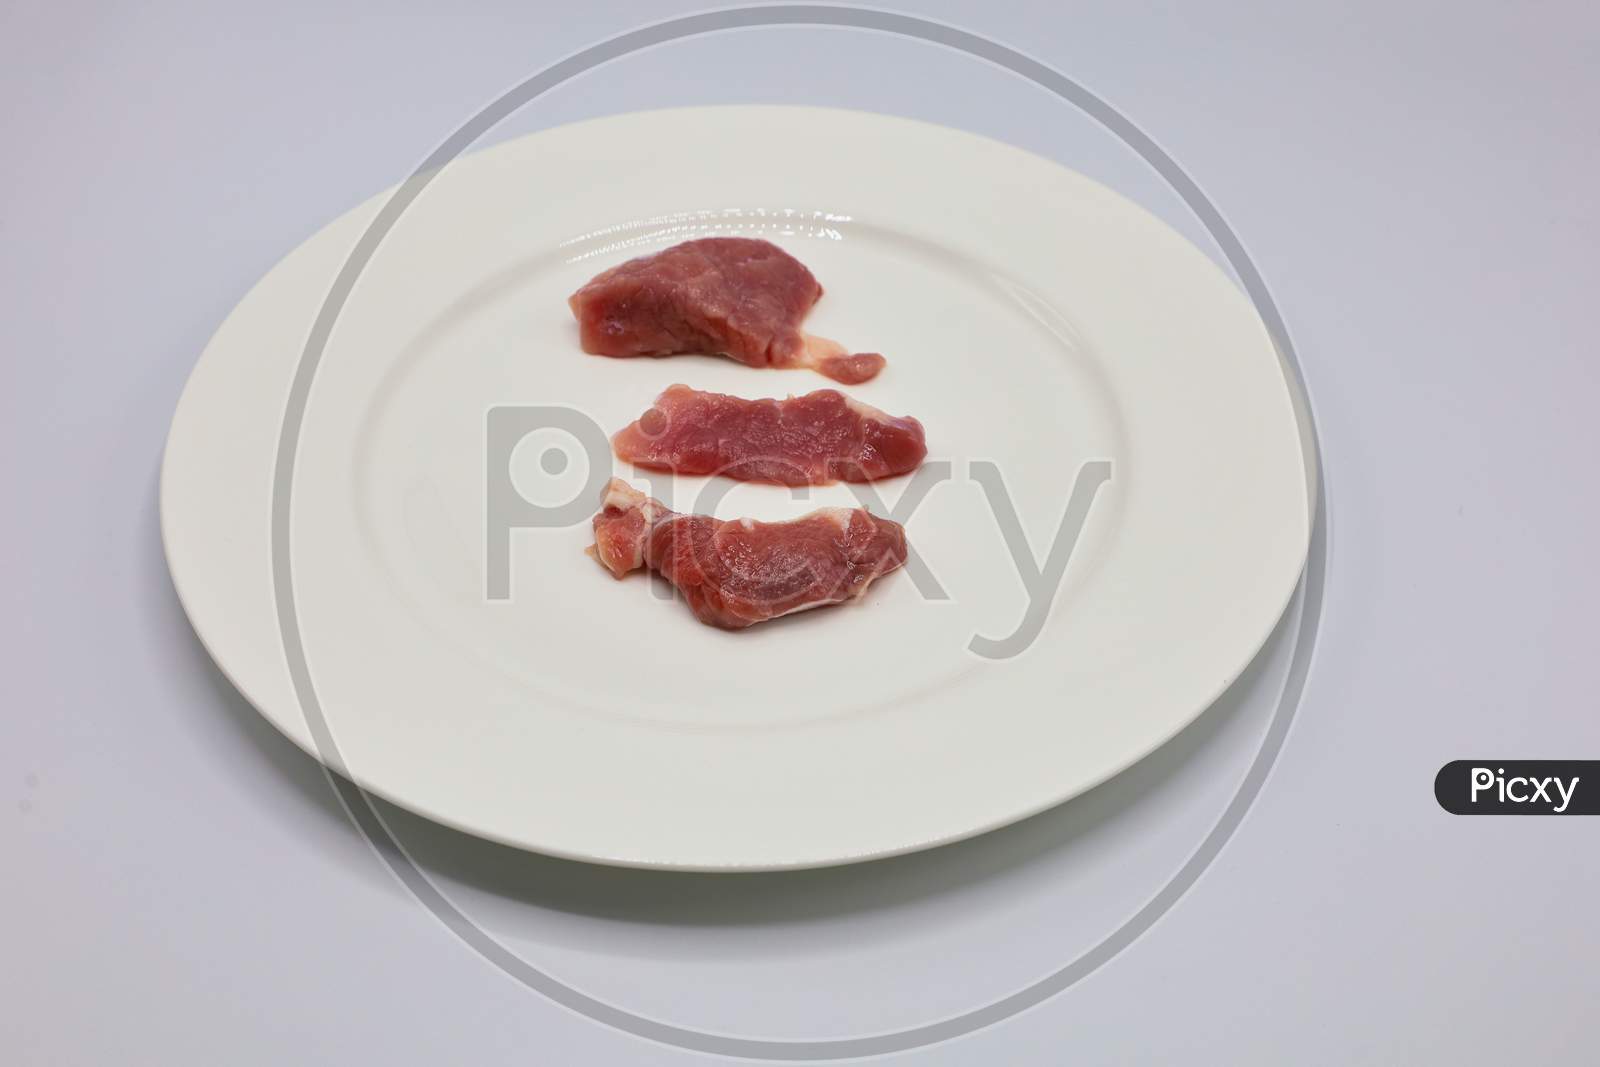 Meat, pork, slices pork loin on a white background